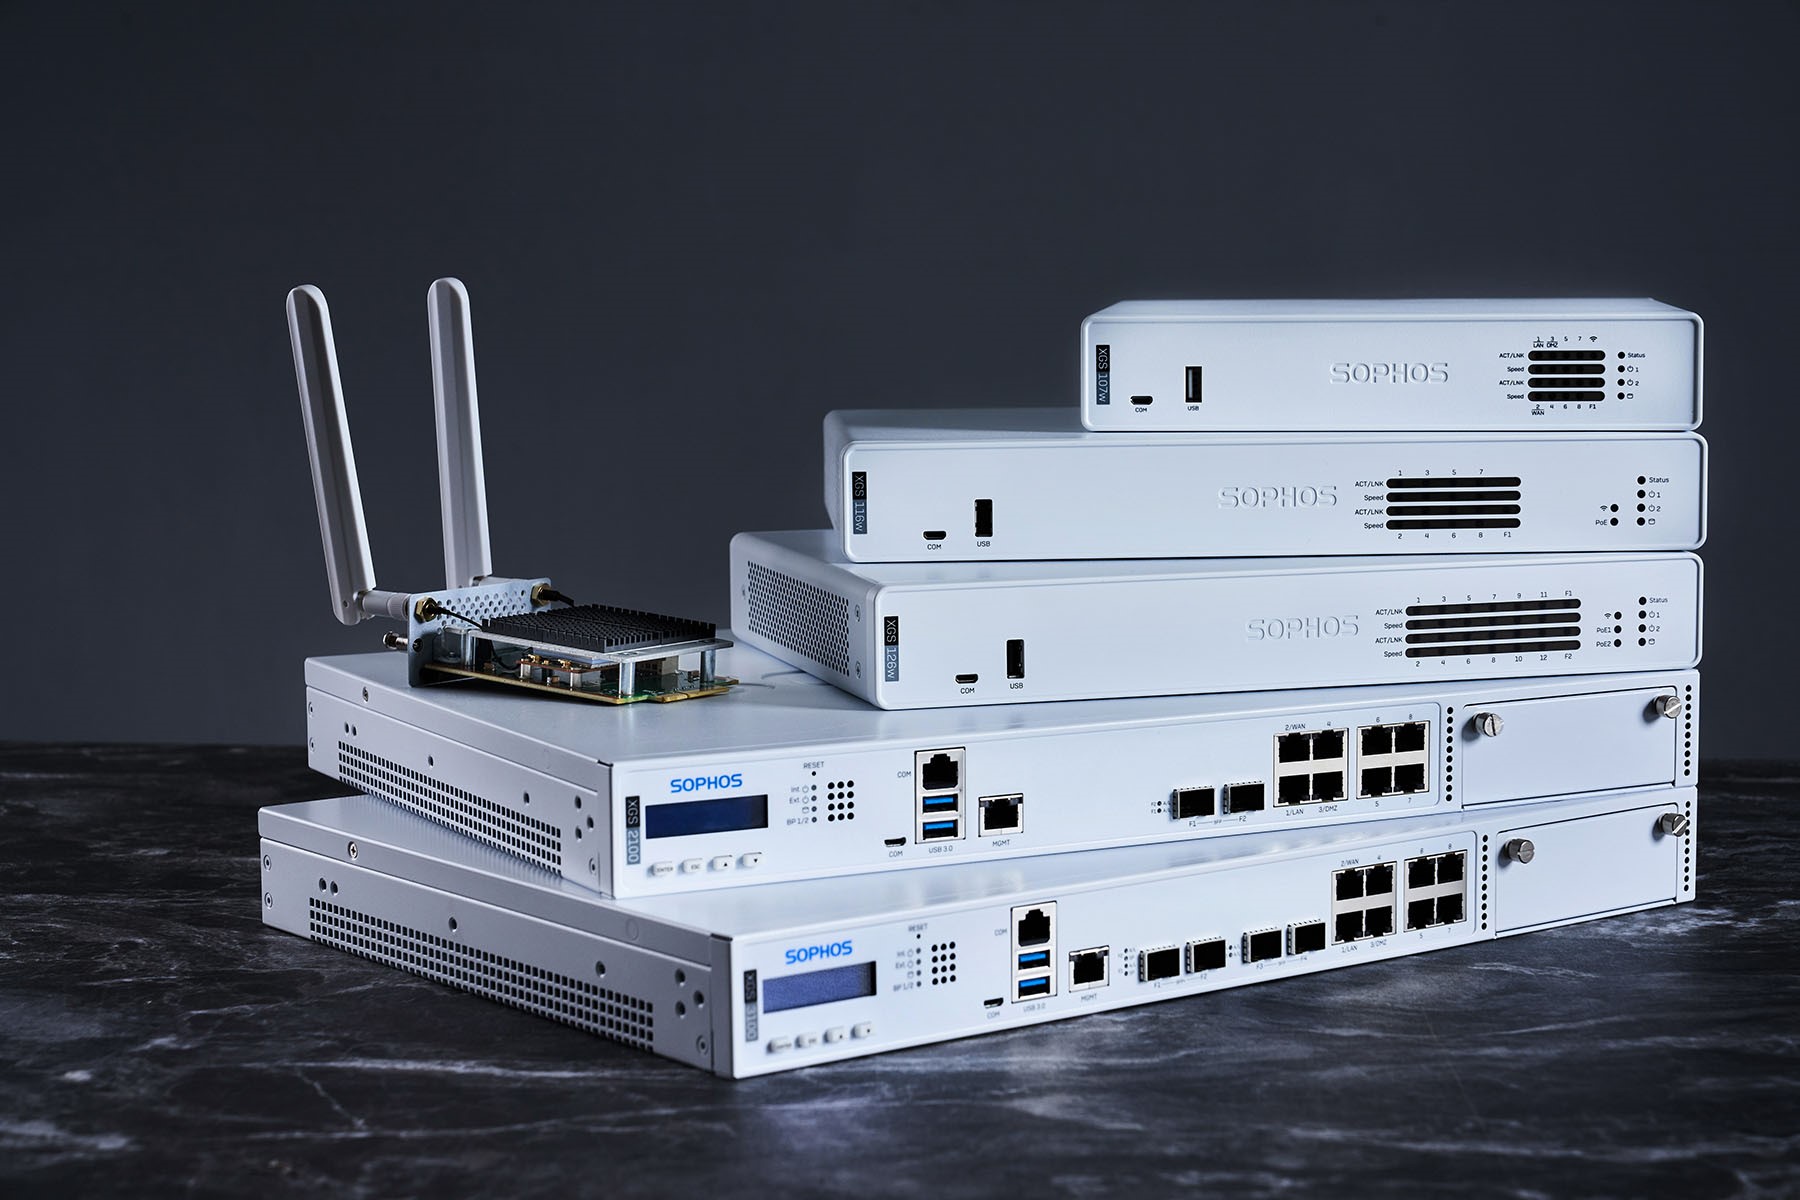 「HiNet SME 超寬頻整合服務」提供界首屈一指的「SOPHOS XGS Firewall」系列閘道器產品。